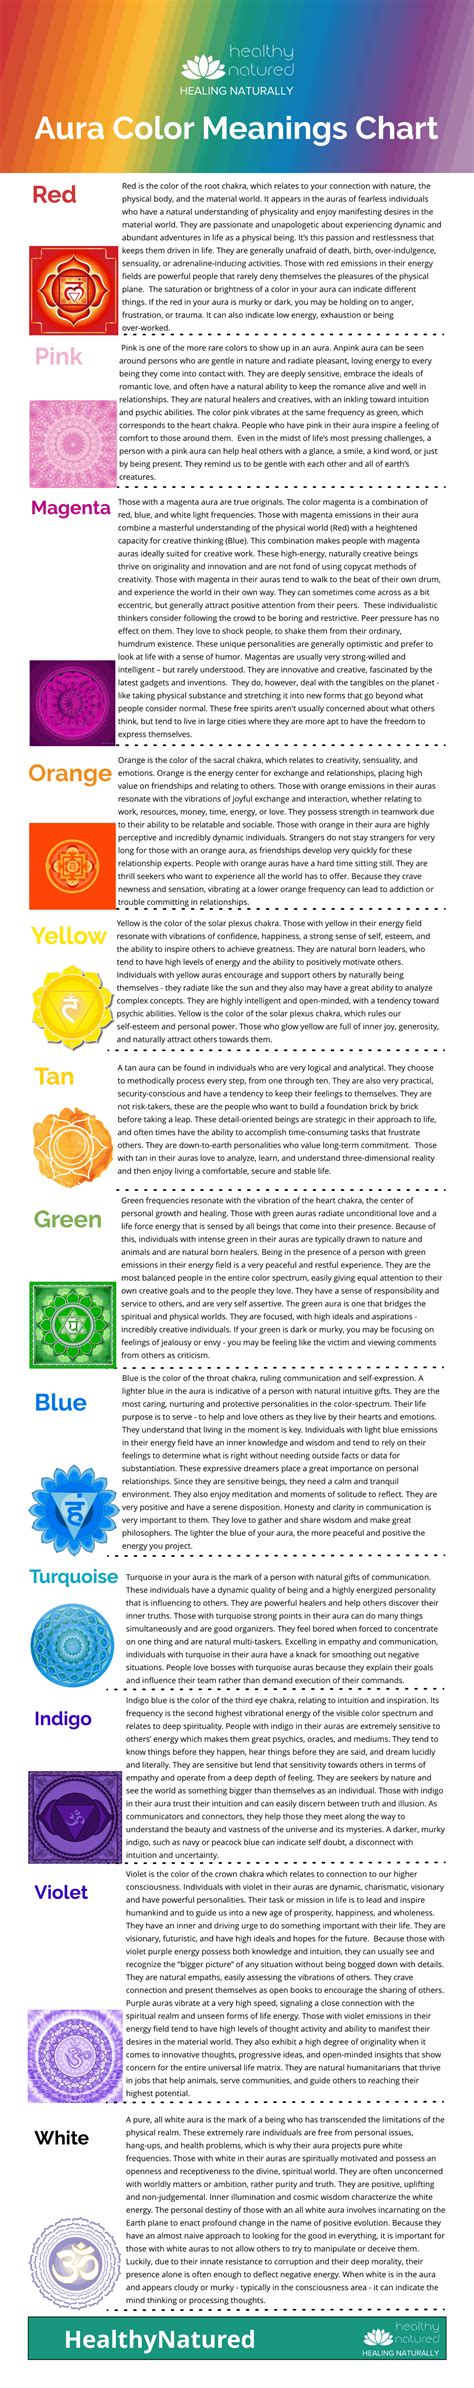 Aura Colors Chart - Discover Your Aura Color Meanings! | Aura colors meaning, Aura colors, Color ...